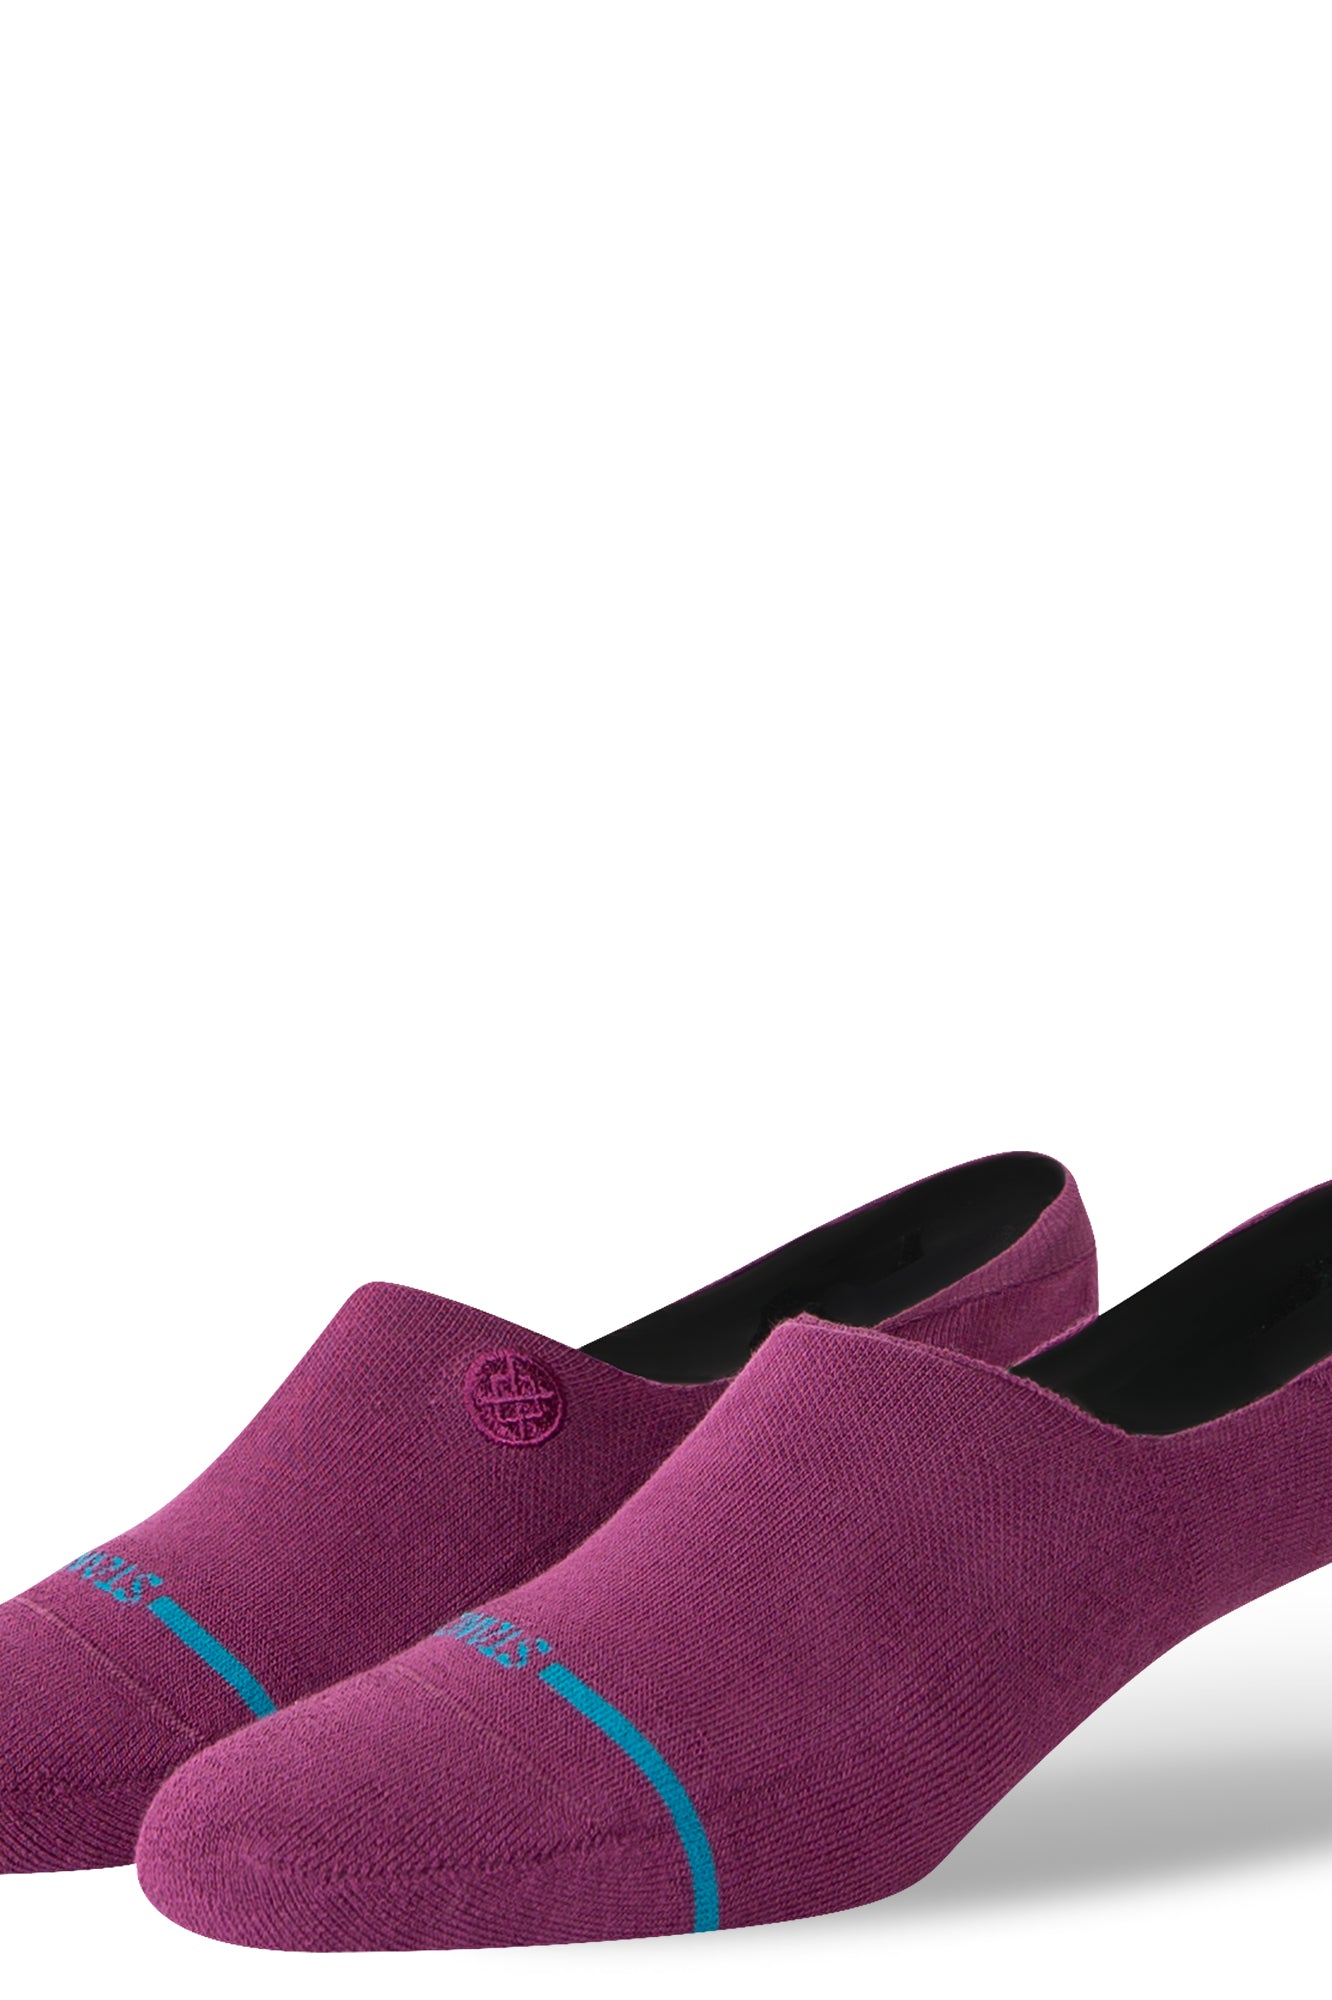 Stance Cotton No Show Socks Small (Men 3-5.5 / Women 5-7.5) / Berry Small (Men 3-5.5 / Women 5-7.5) Berry socks Stance- Tilden Co.